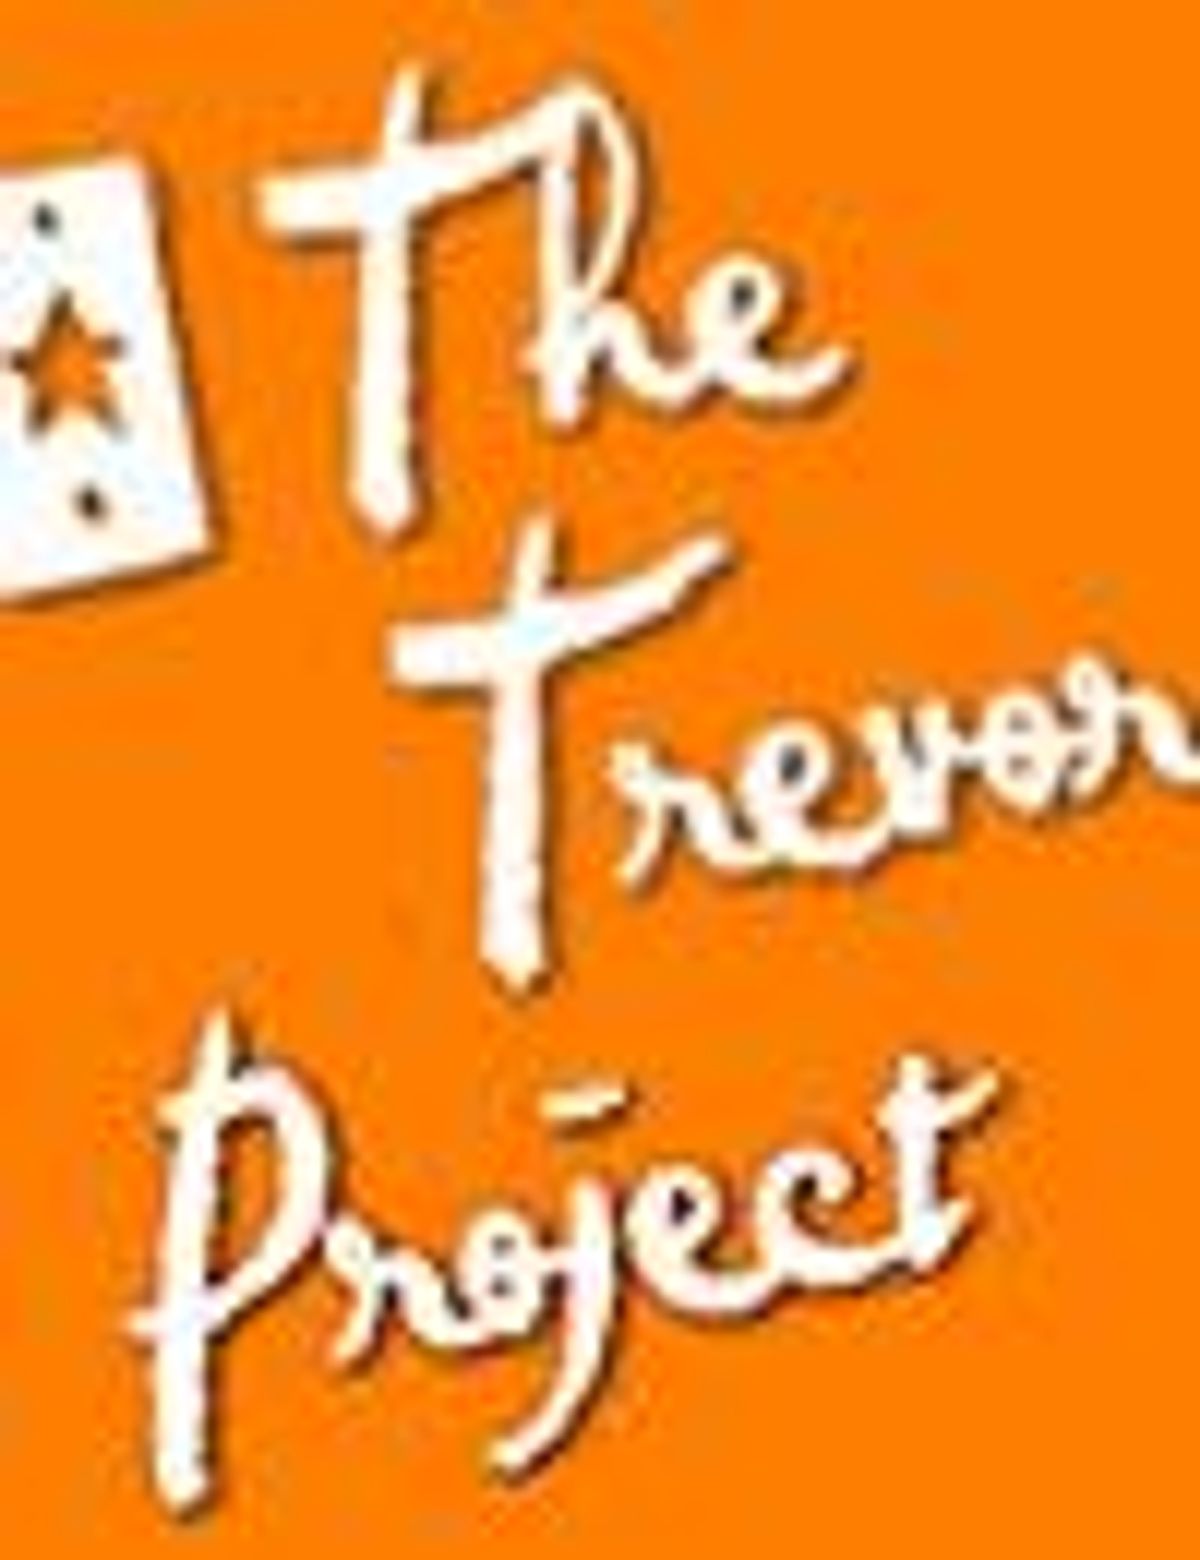 Trevor_project